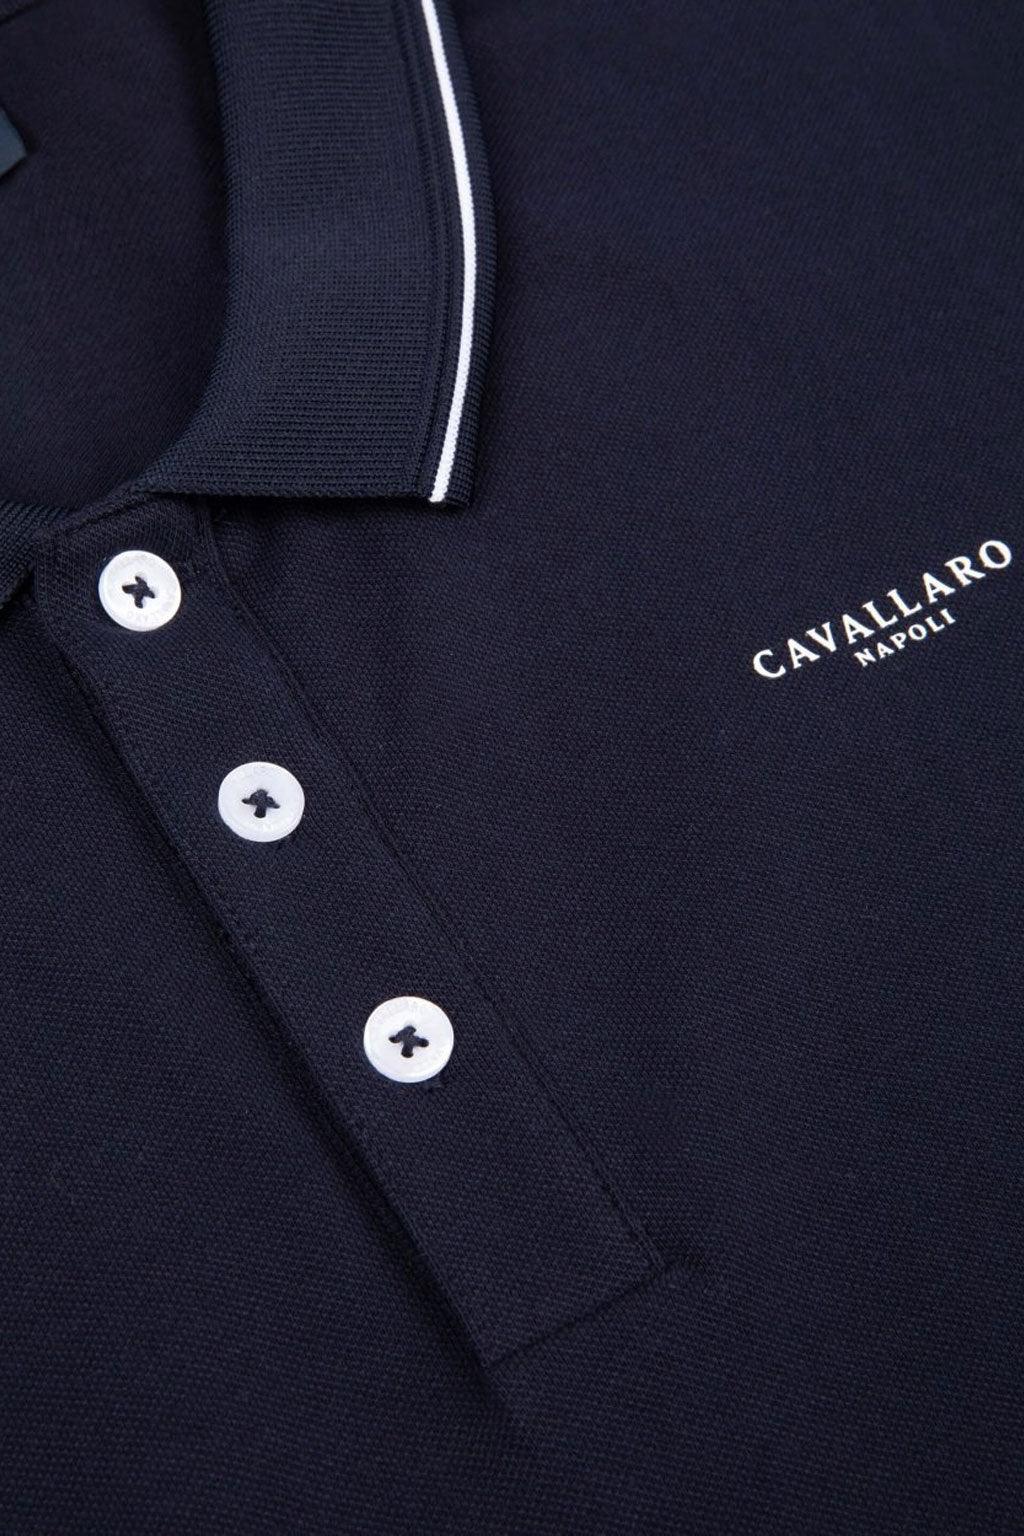 Cavallaro polo | Big Boss | the menswear concept